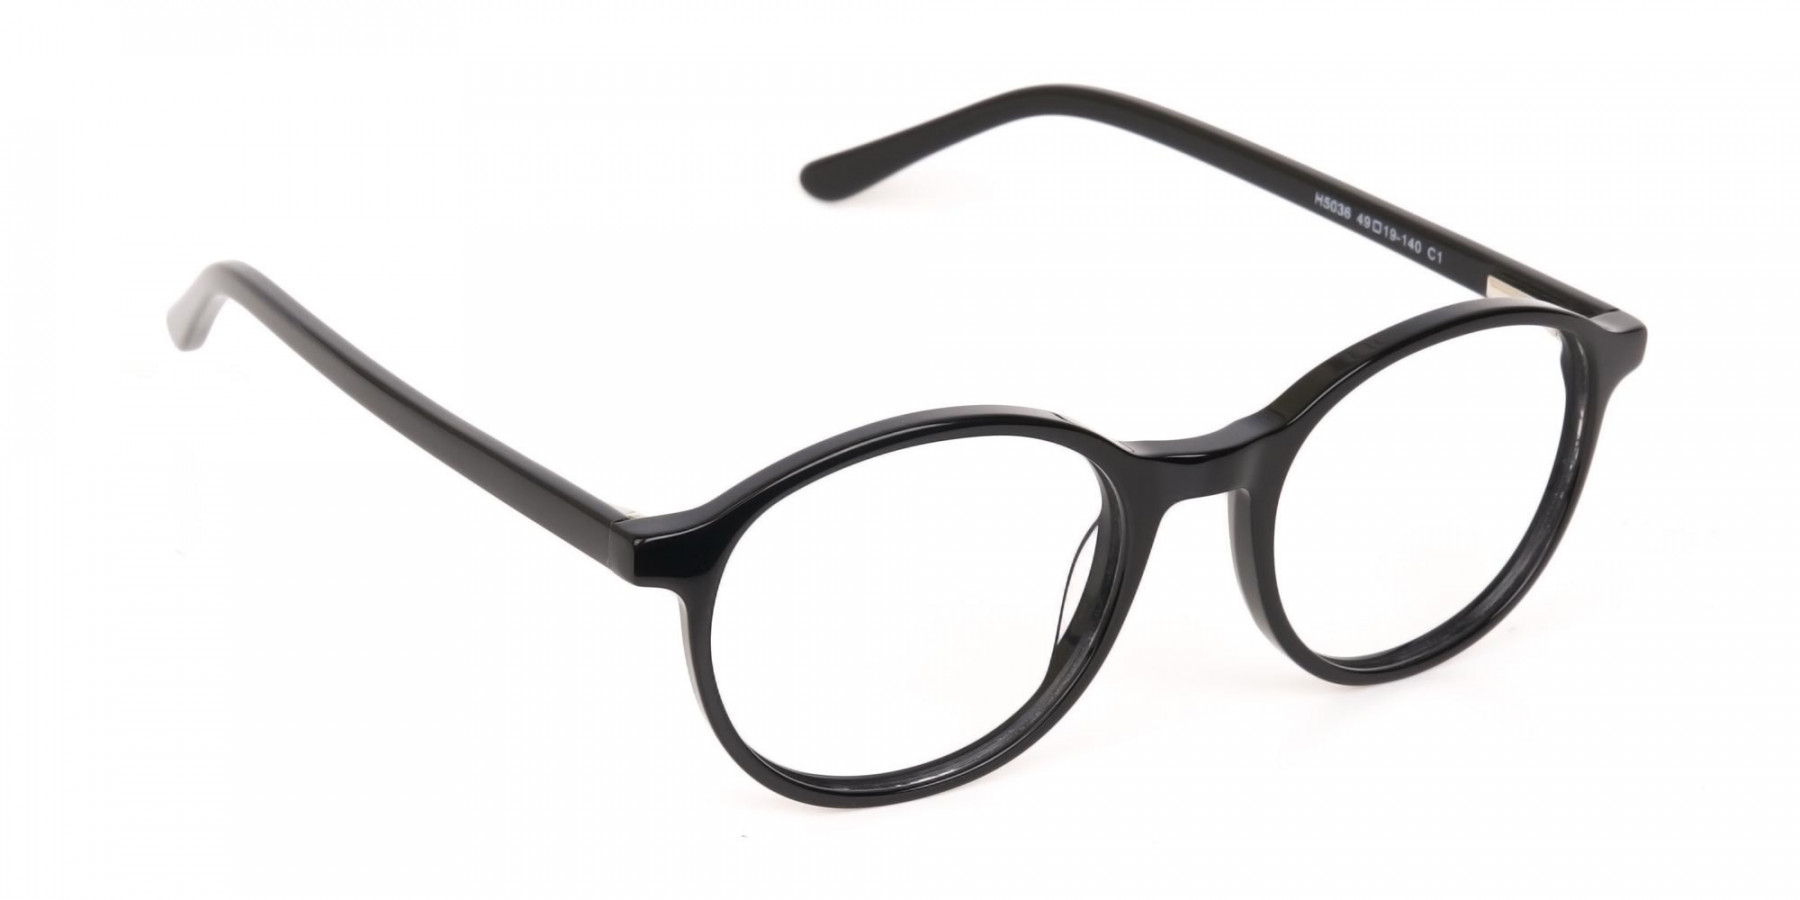 Black Acetate Round Eyeglasses For Unisex-1